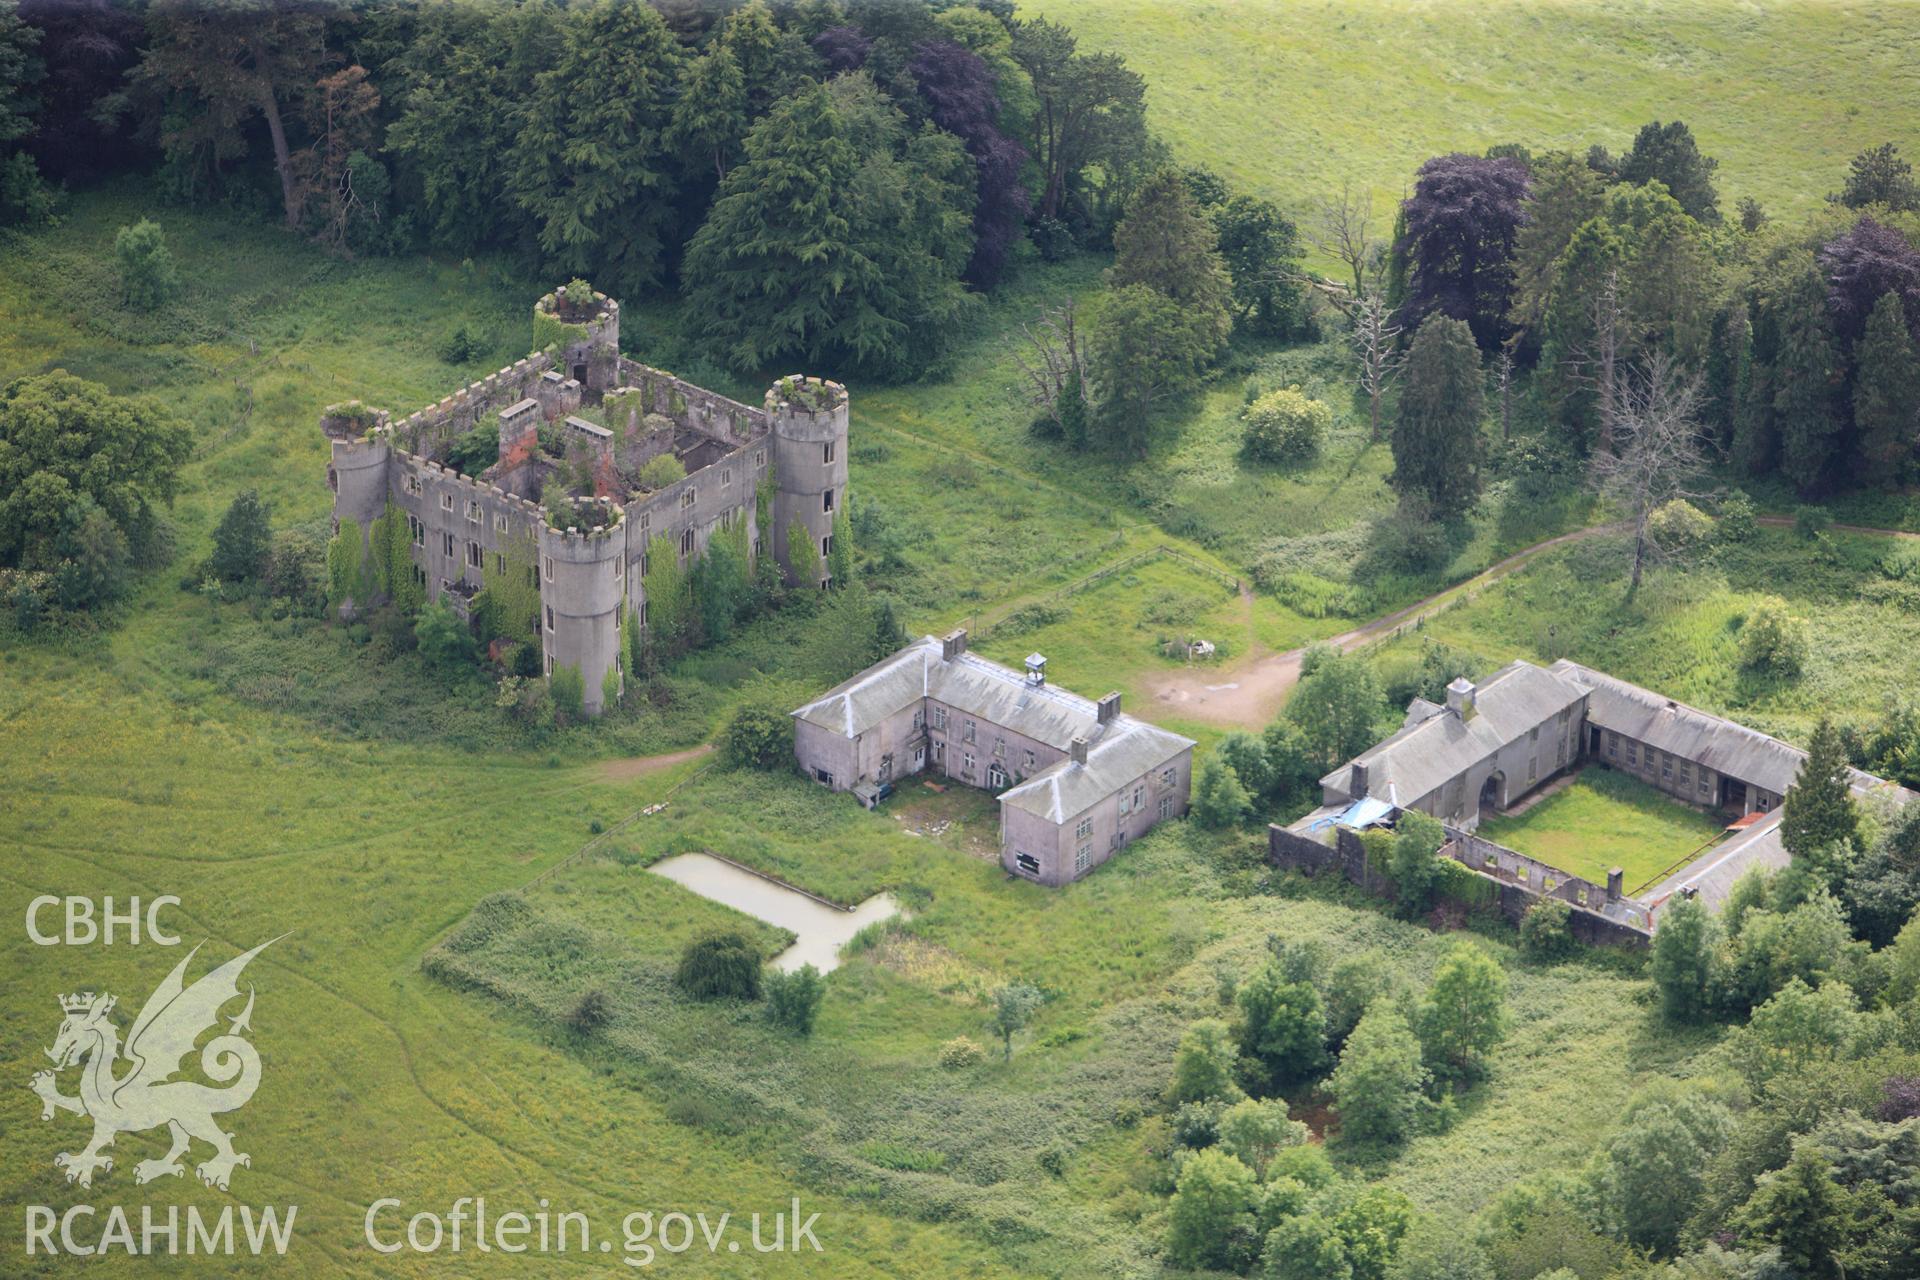 RCAHMW colour oblique photograph of Ruperra Castle. Taken by Toby Driver on 13/06/2011.